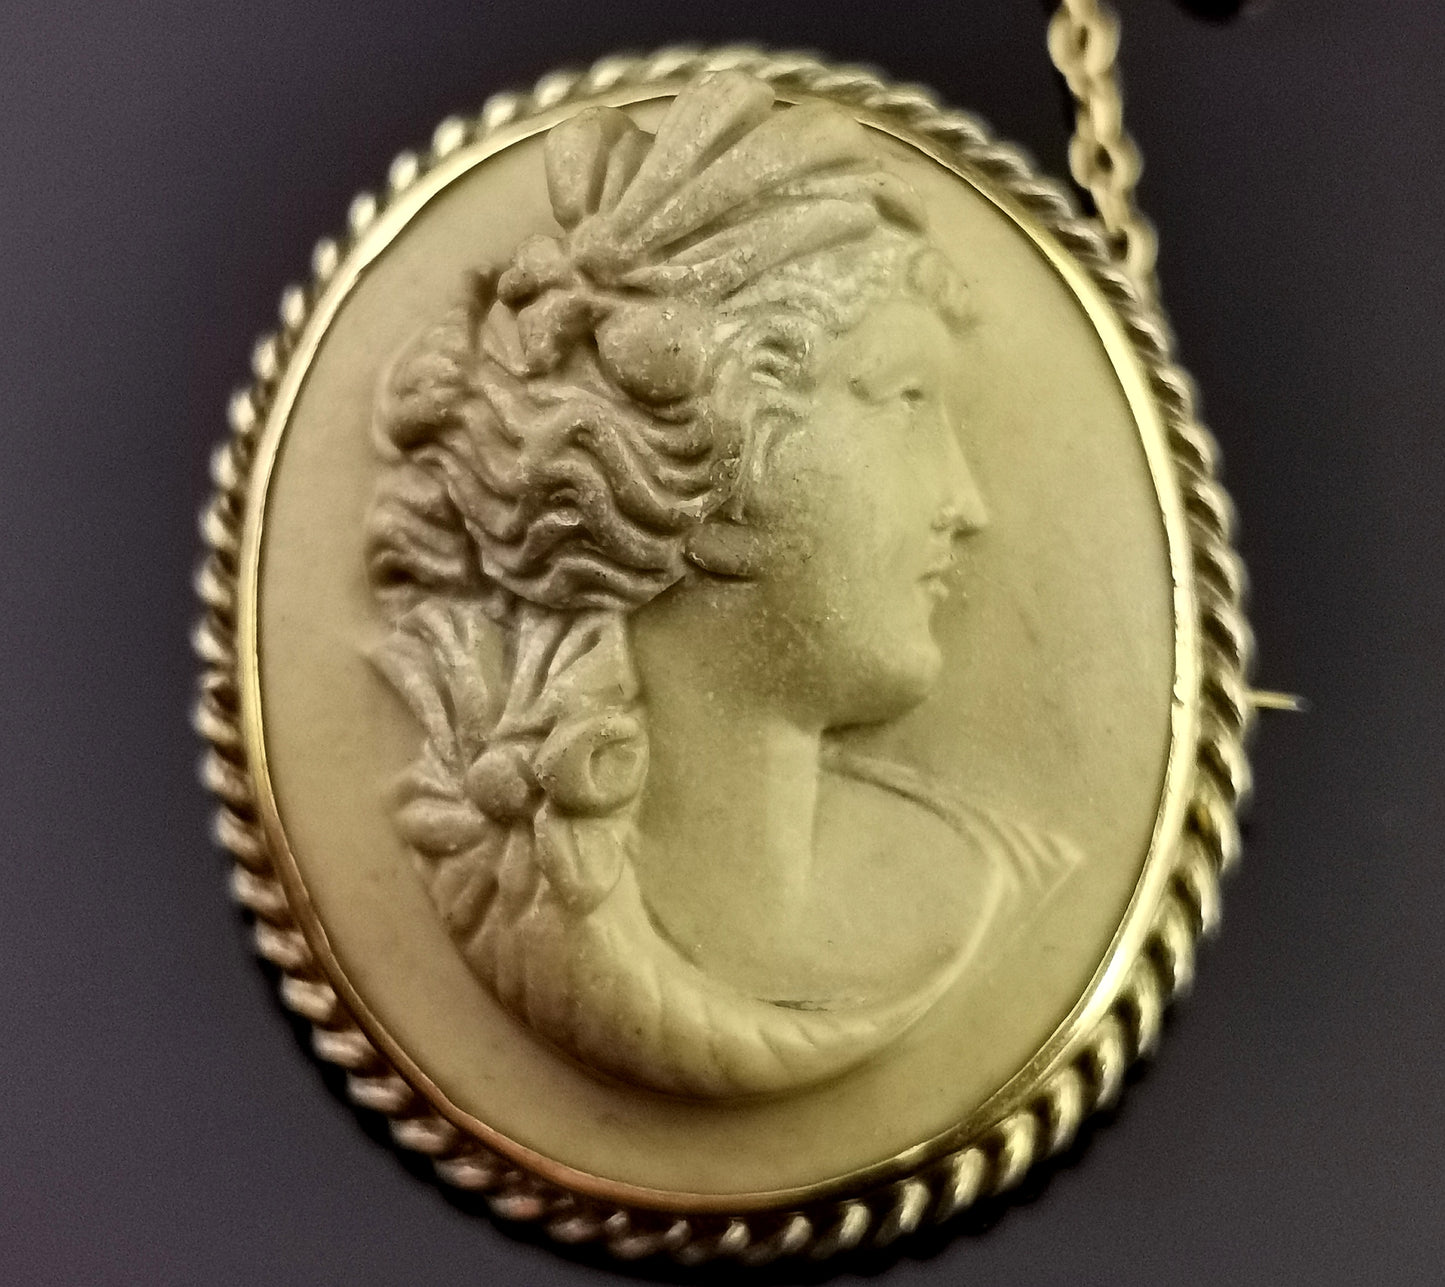 Antique Lava Cameo brooch, 19th century